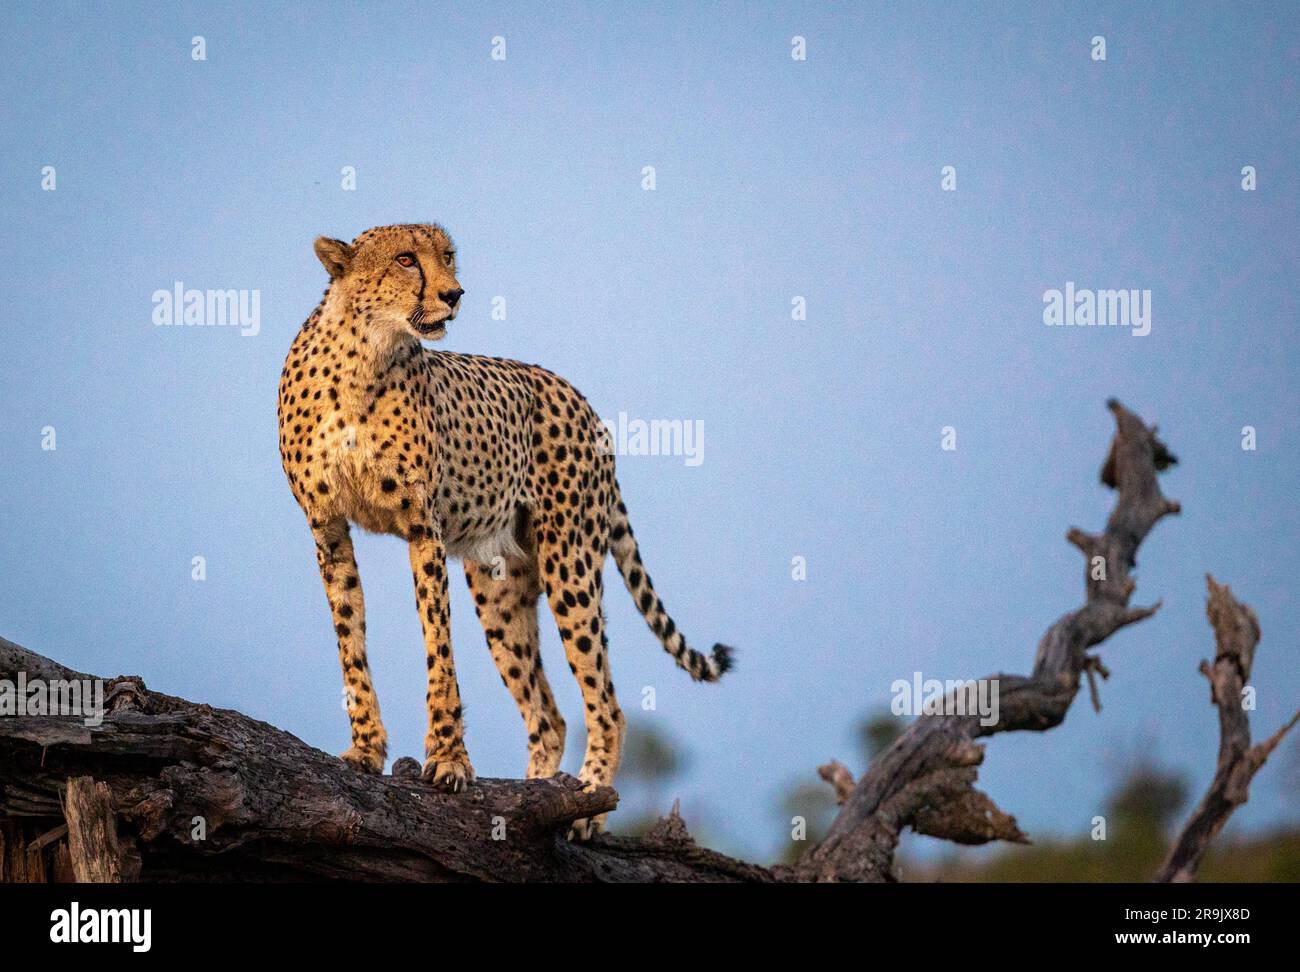 A male cheetah, Acinonyx jubatus, standing on a fallen over tree. Stock Photo